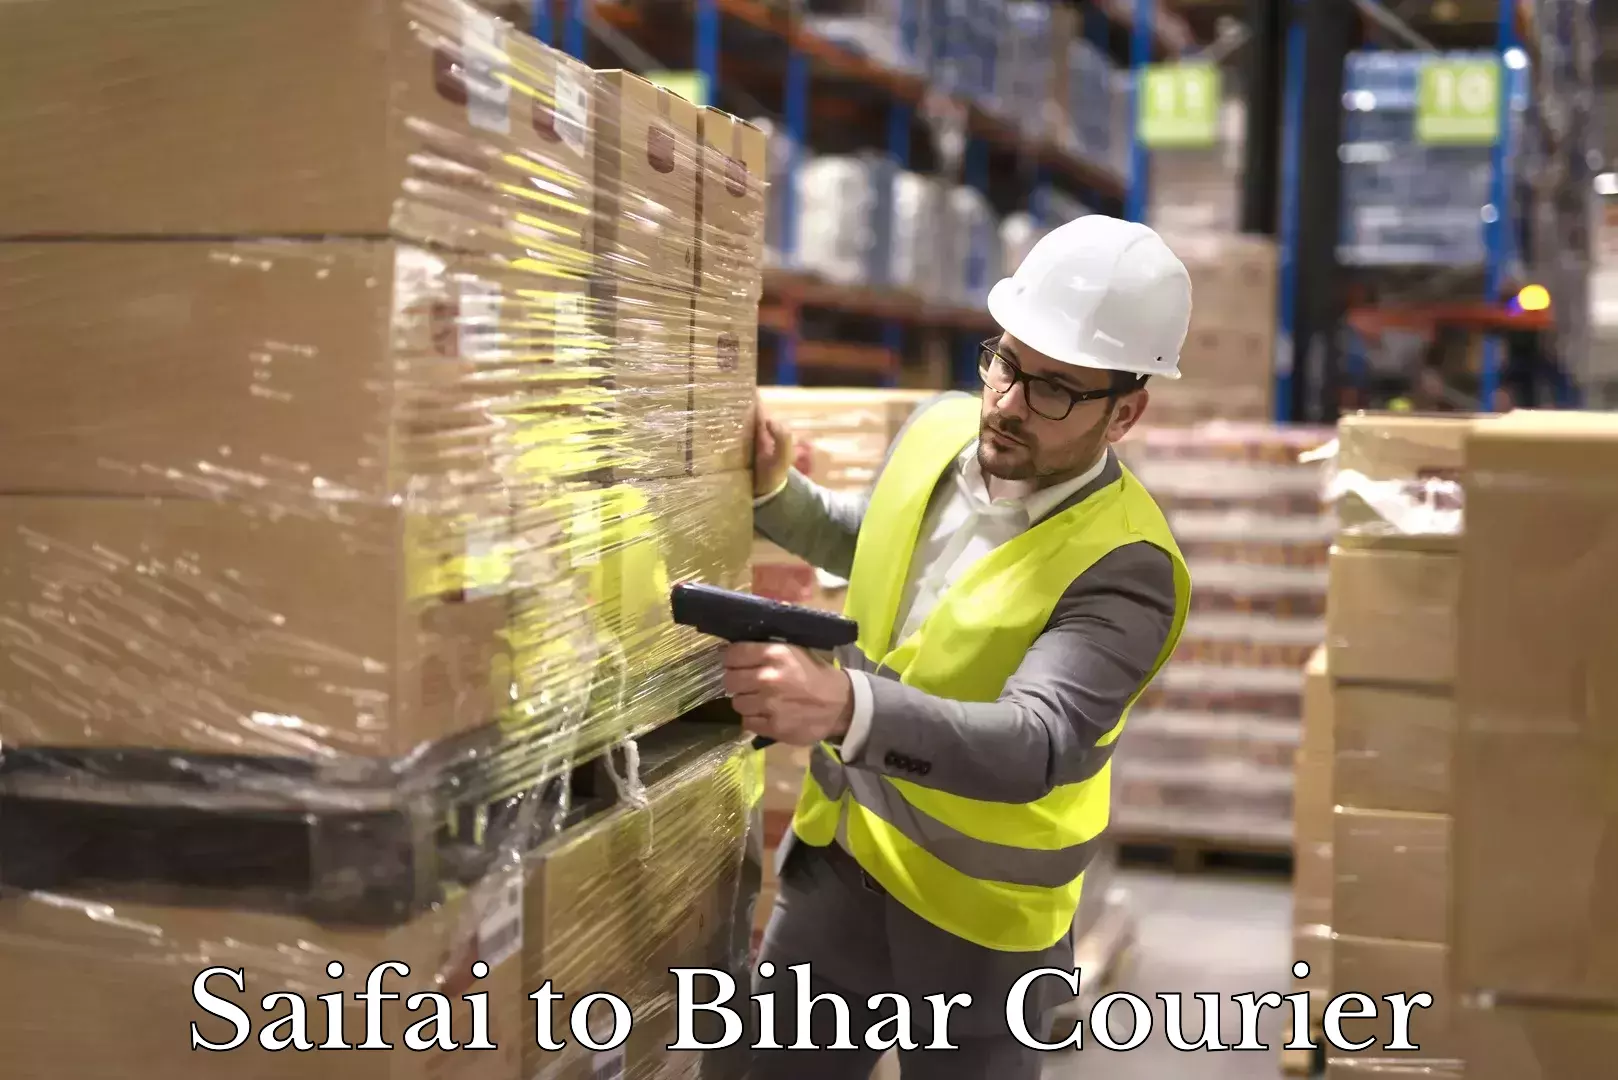 Courier app Saifai to Bihar